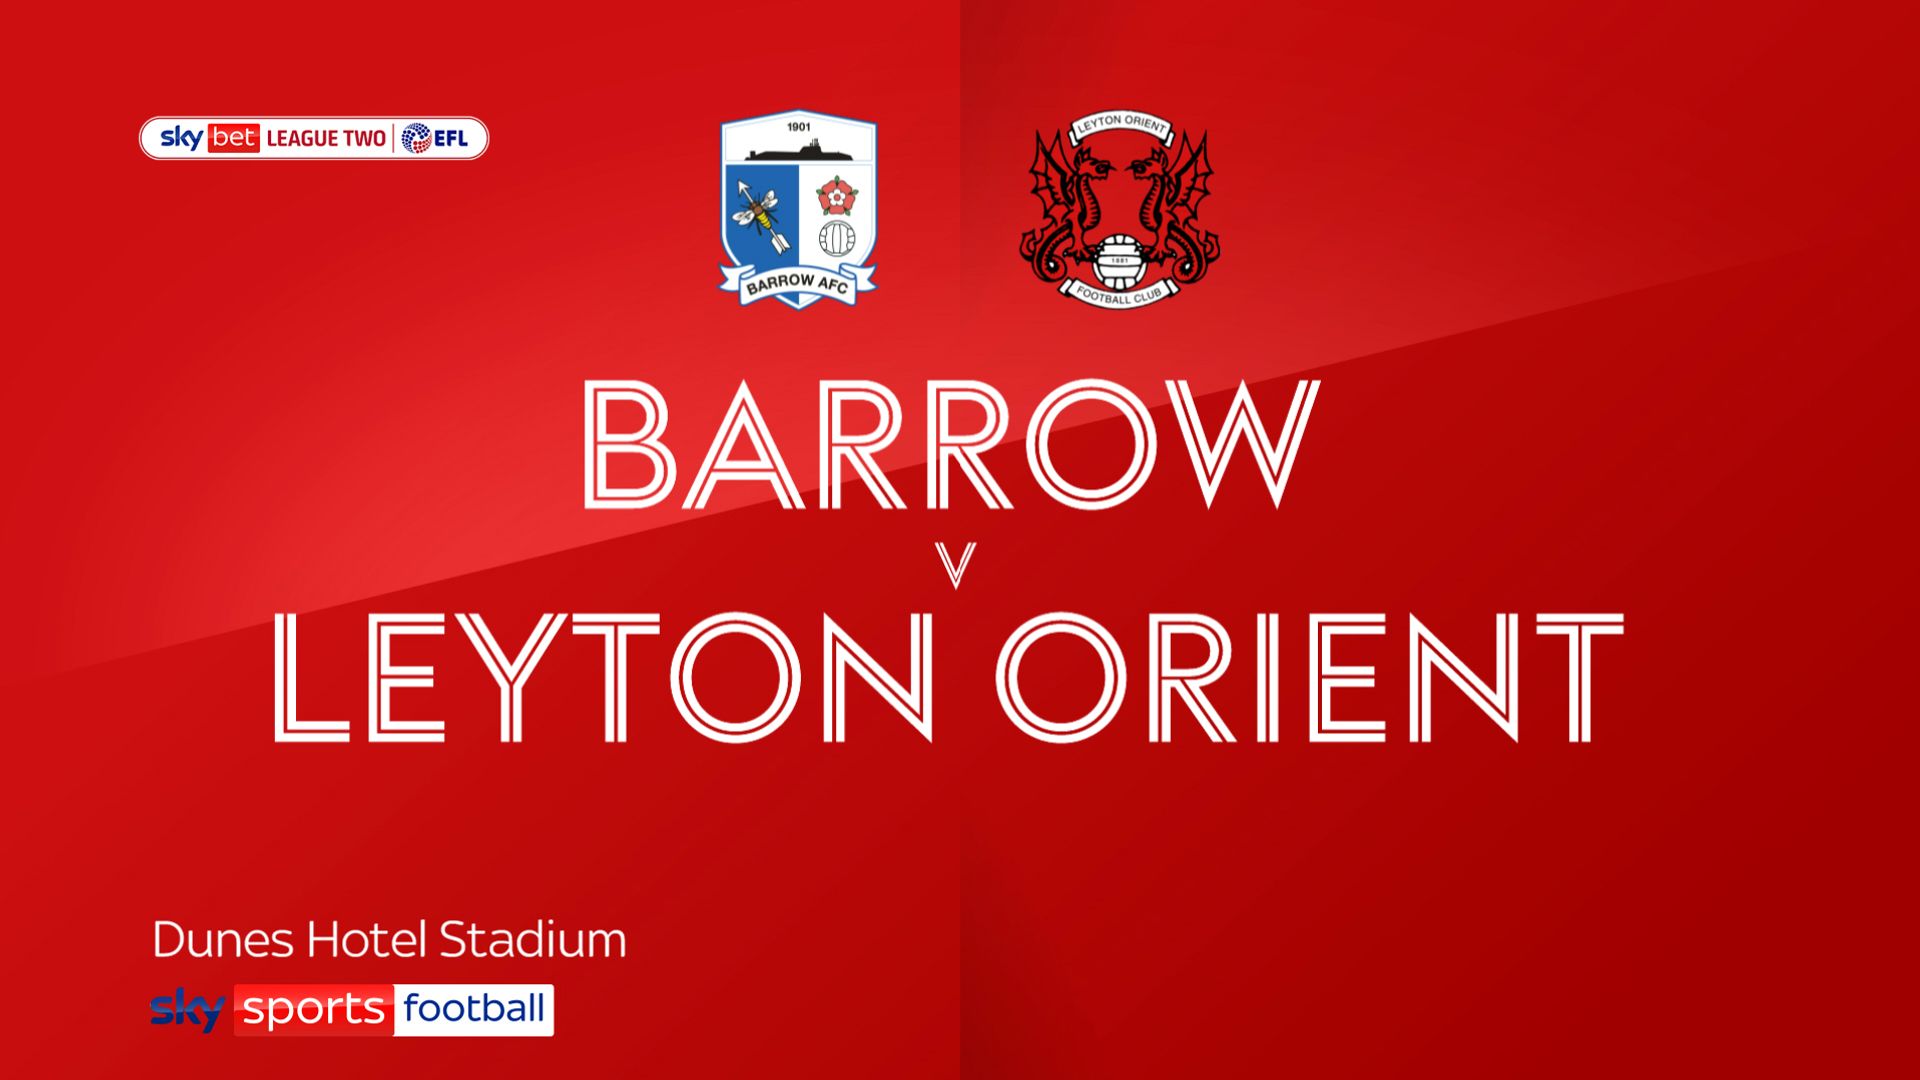 Barrow 0-2 Leyton Orient: League Two leaders extend fine run